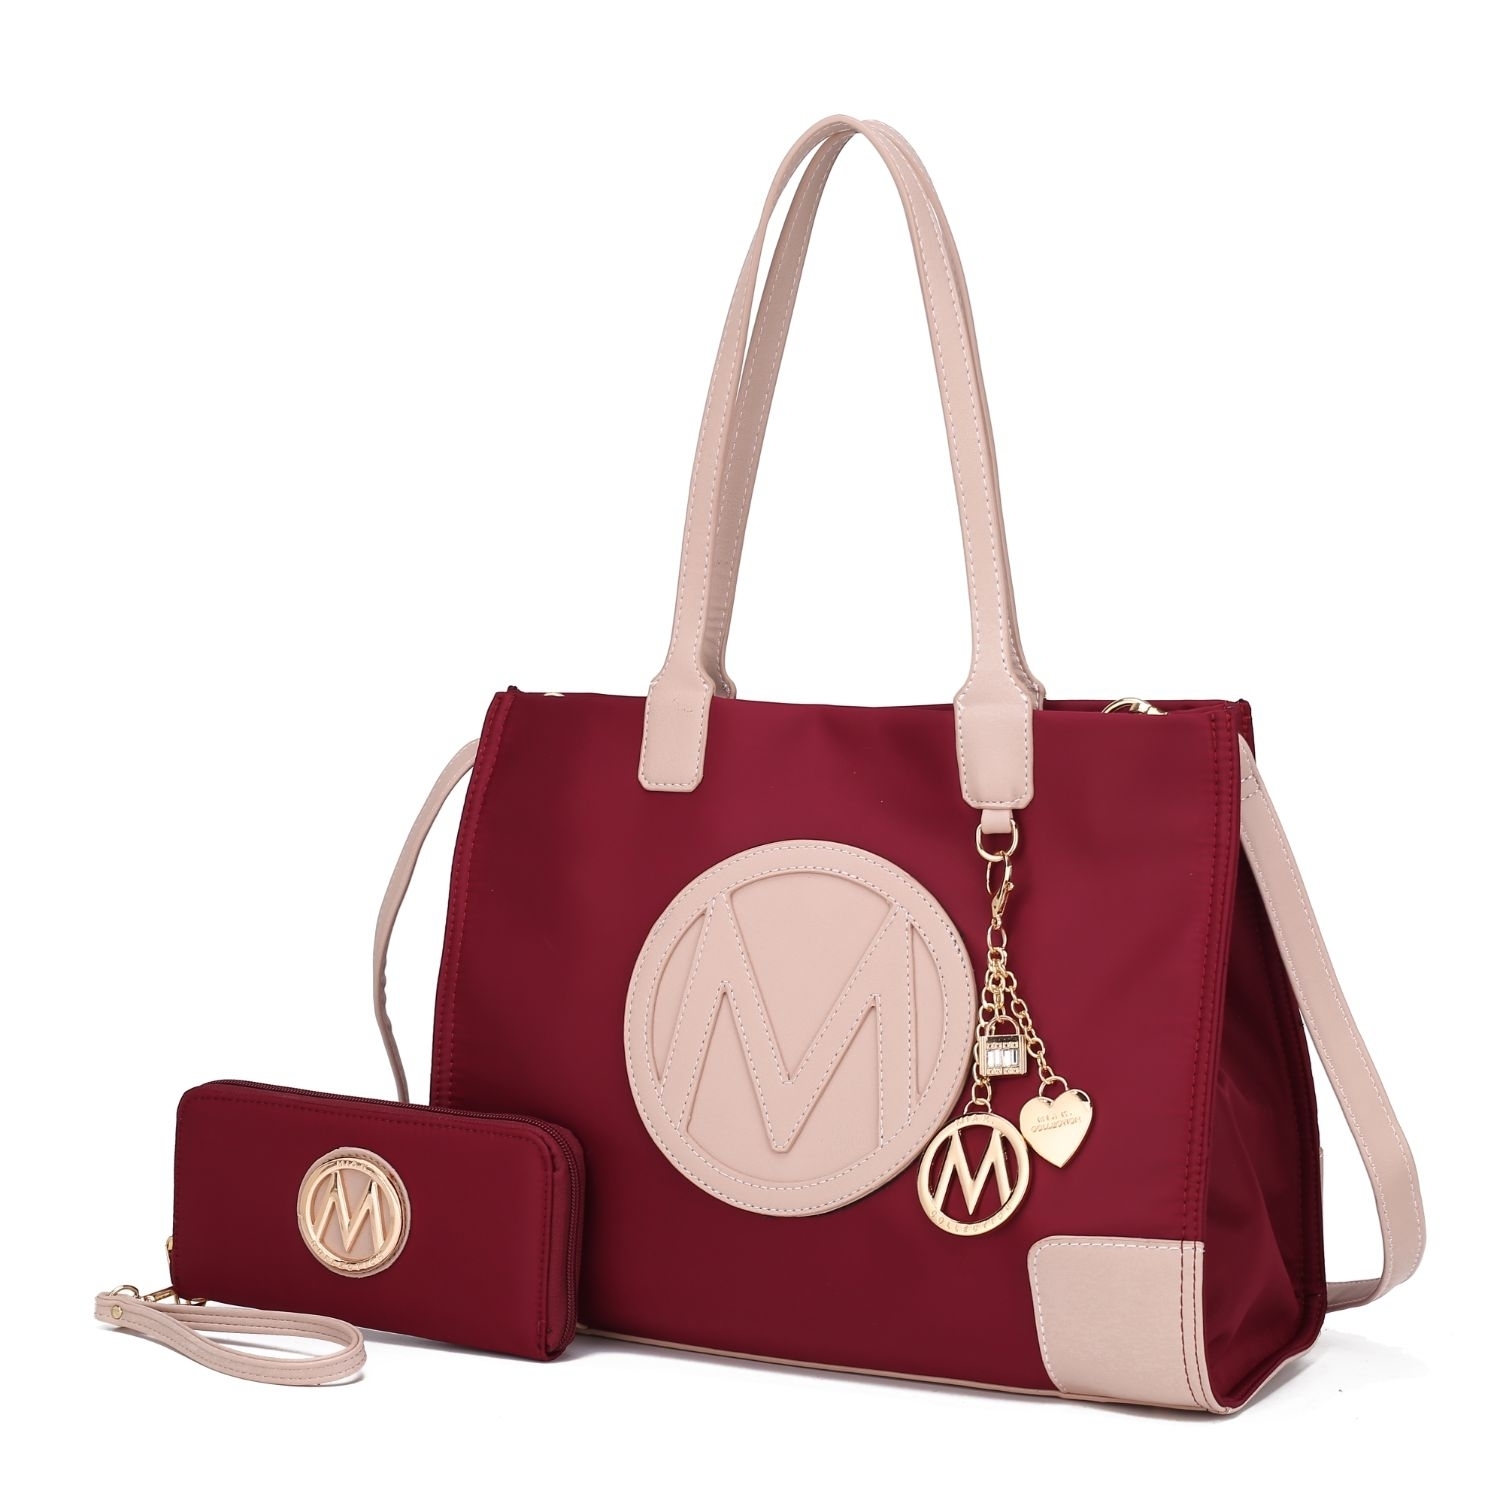 MKF Collection Louise Tote Handbag And Wallet Set By Mia K. - Burgundy Blush